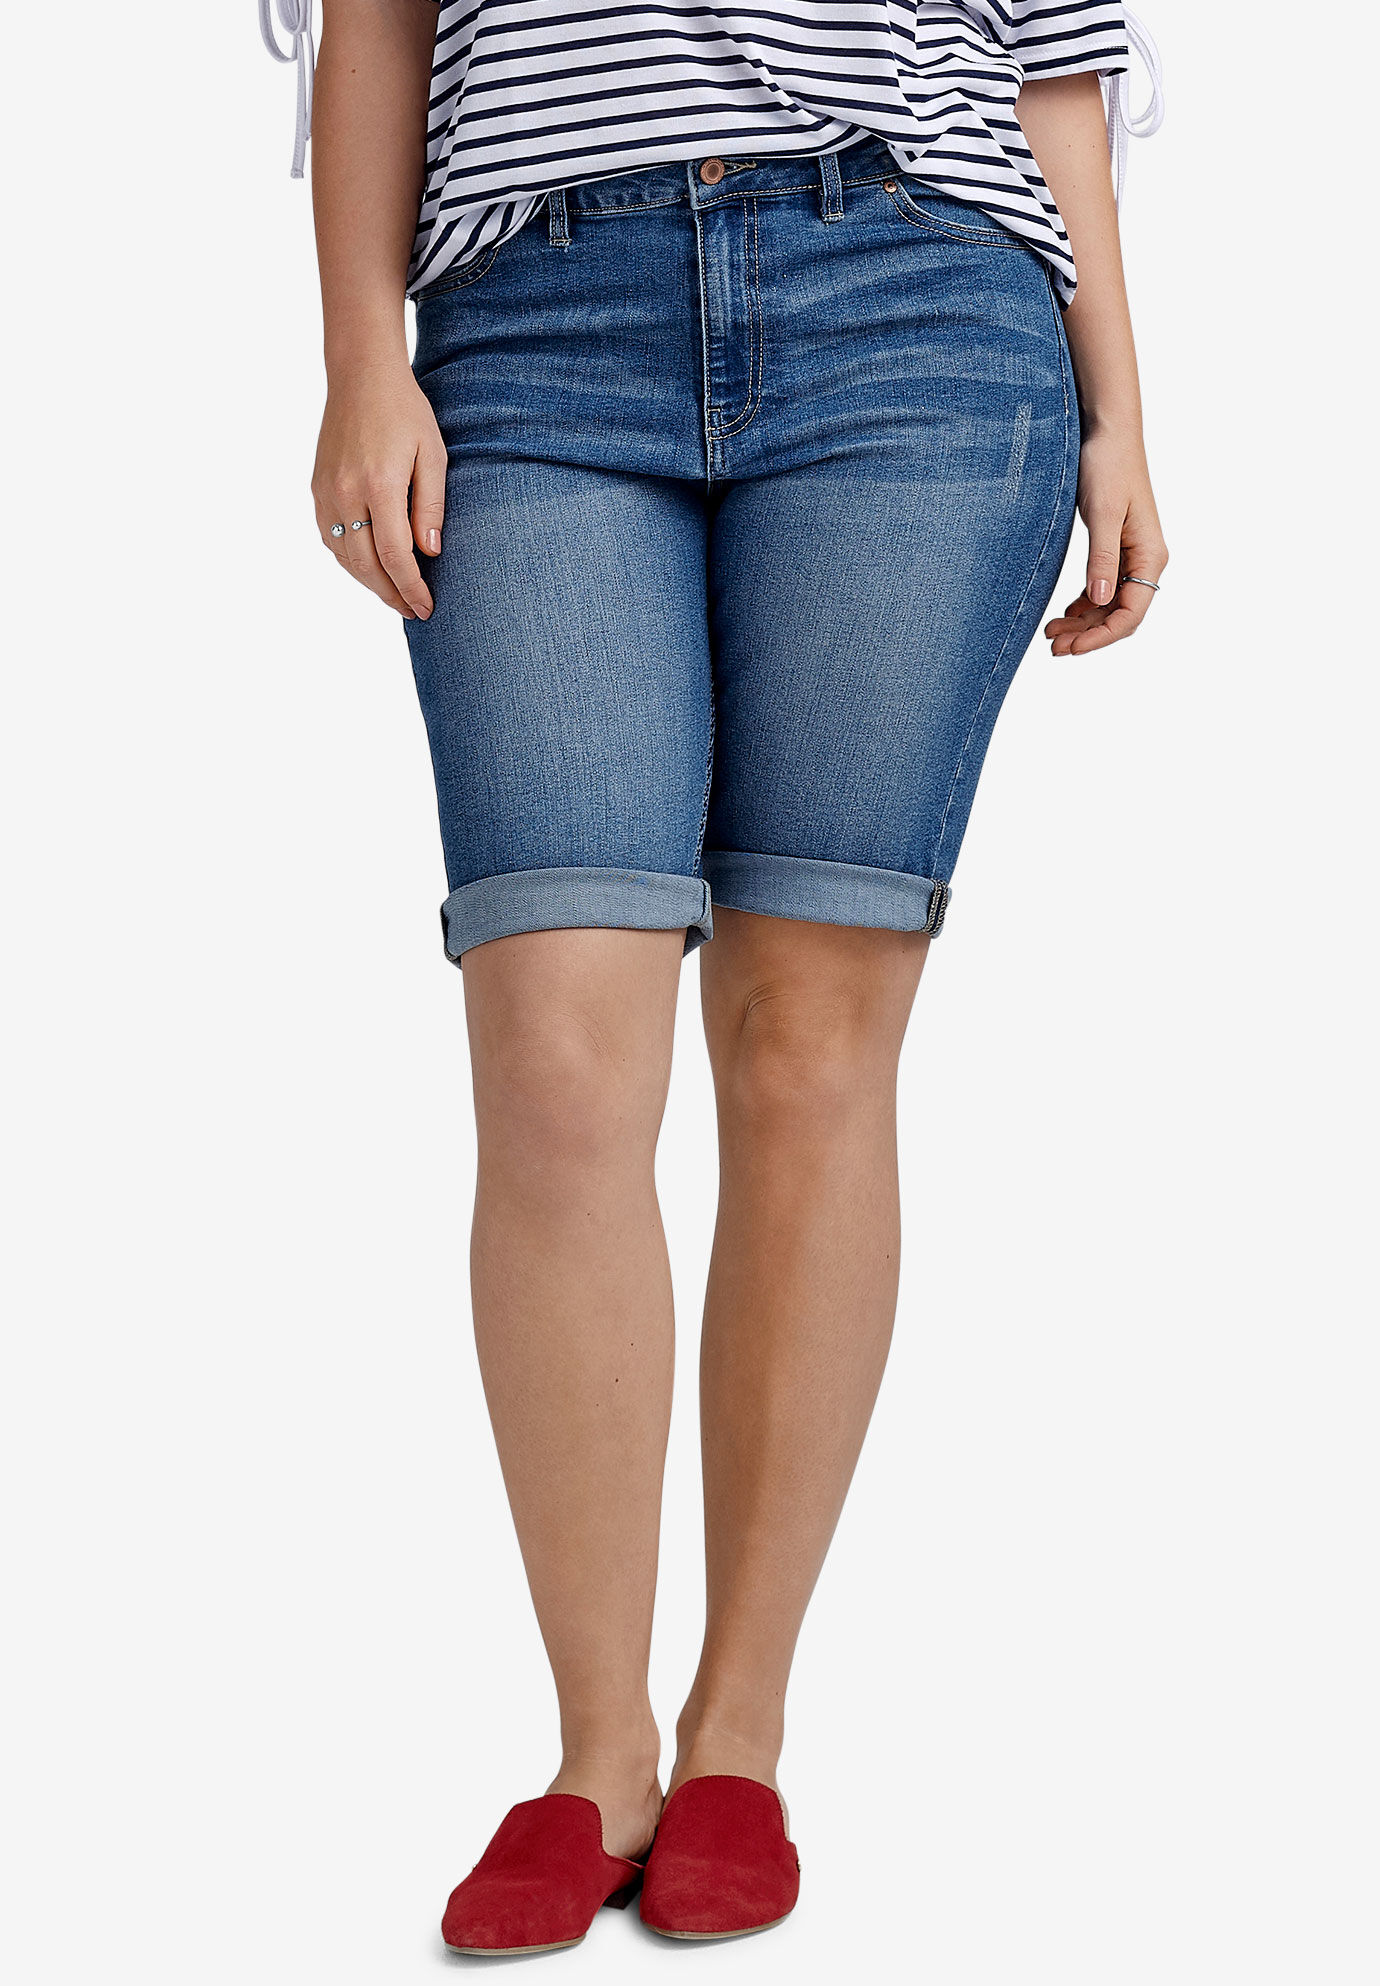 Ladies 14-28 New Stretch Denim Blue Knee Length Shorts Turn Up Womens Plus Size 